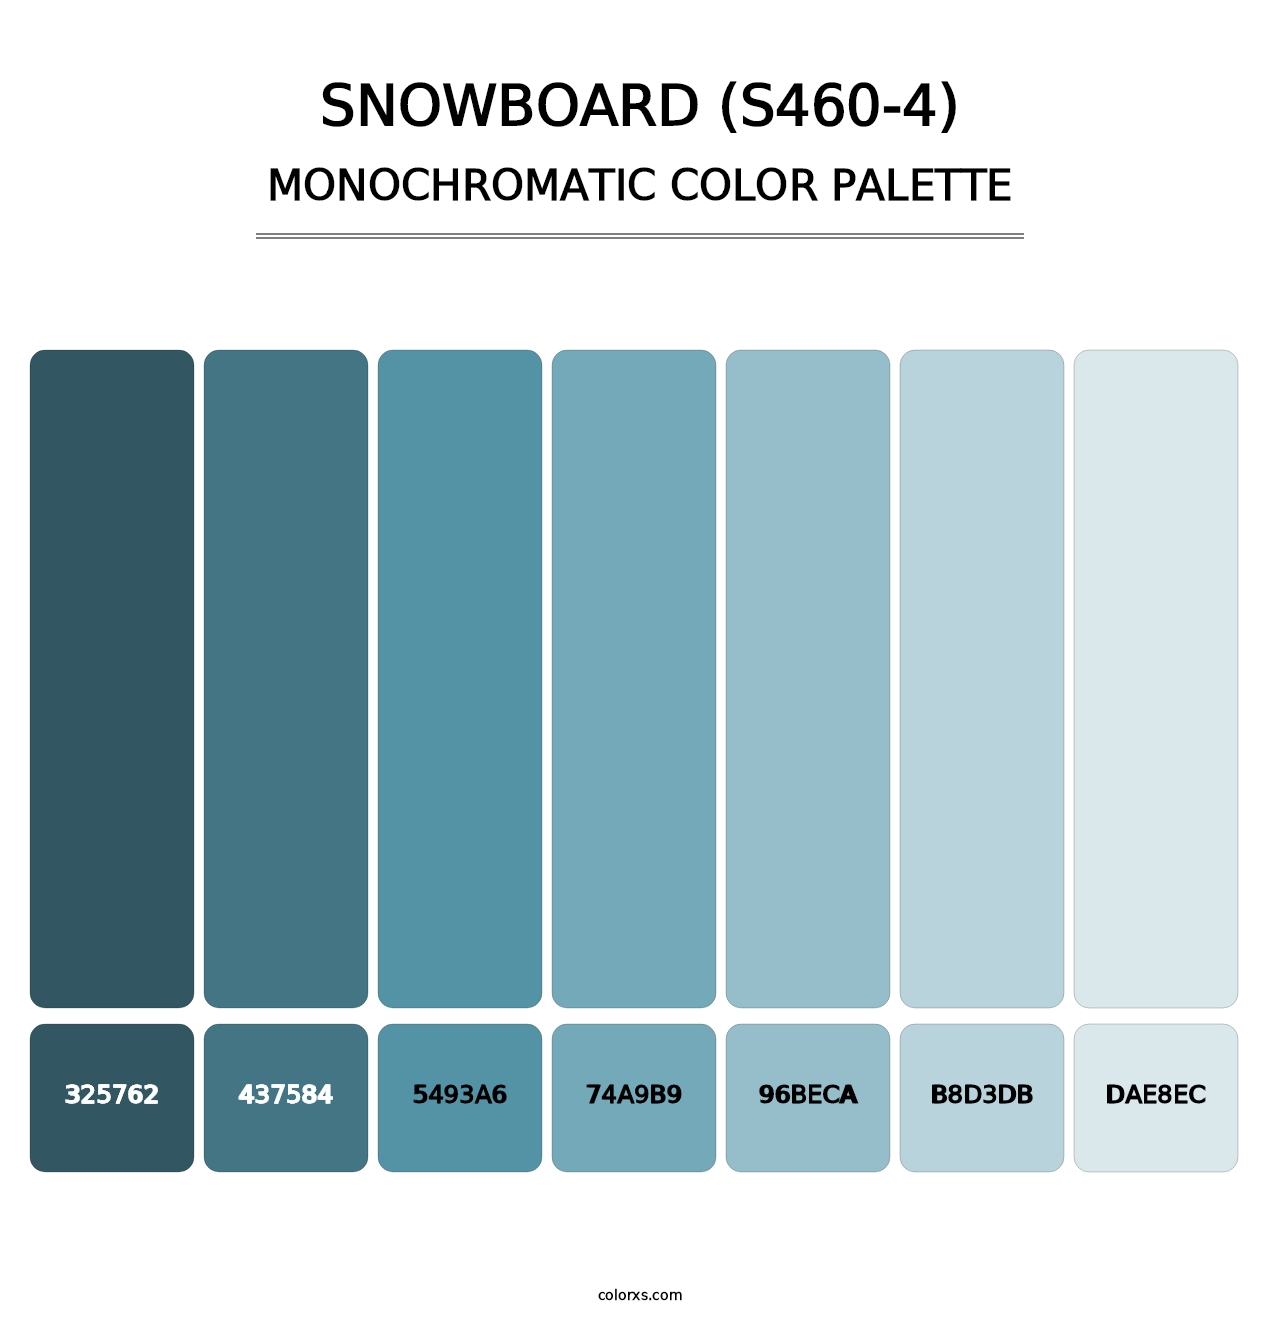 Snowboard (S460-4) - Monochromatic Color Palette